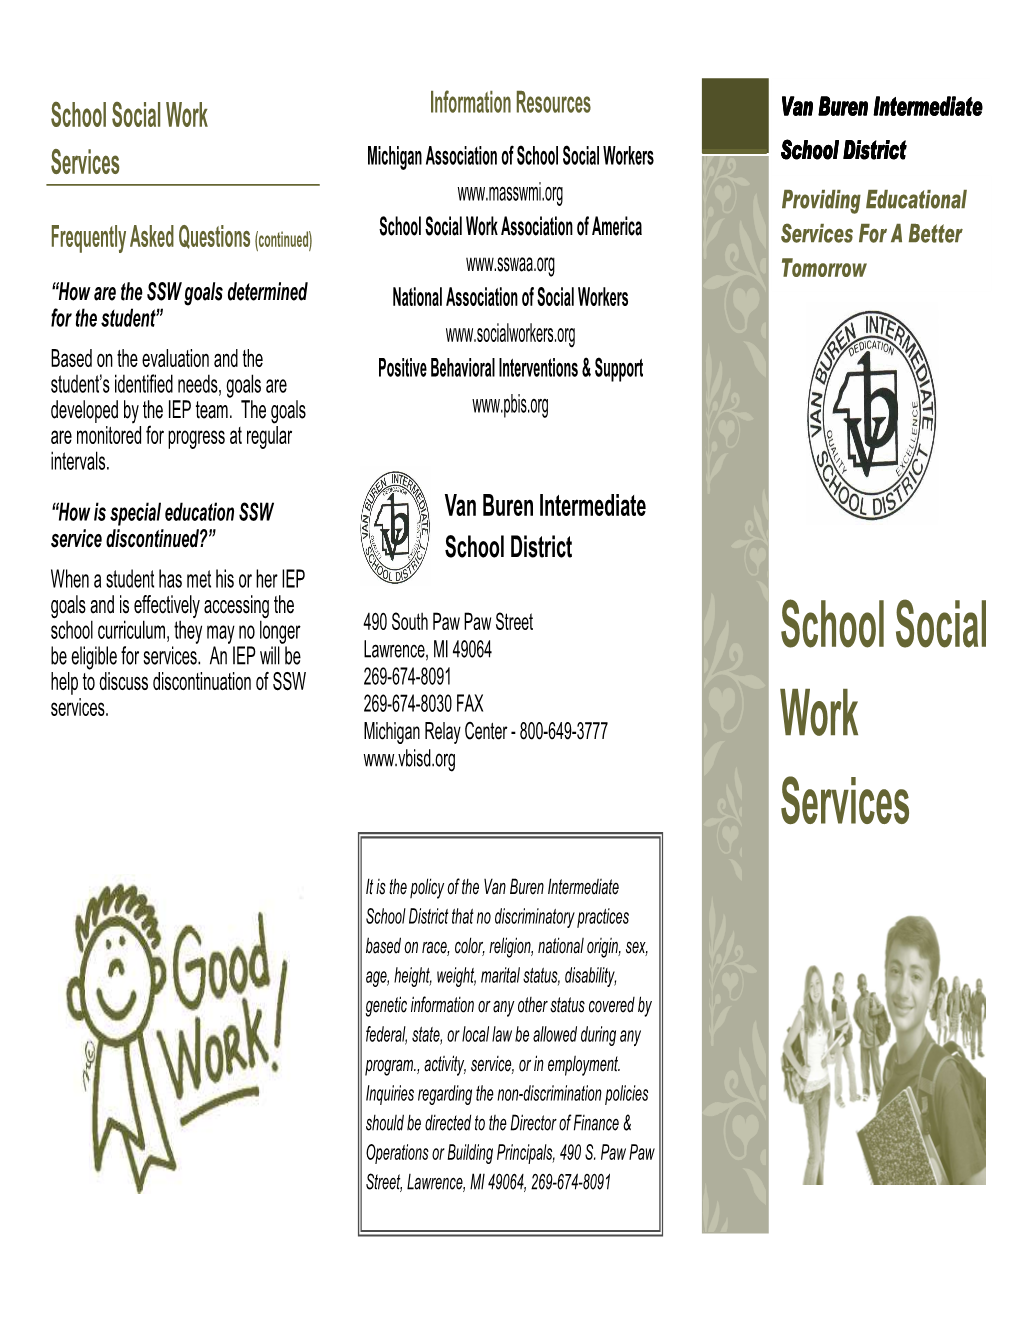 School Social Work Services